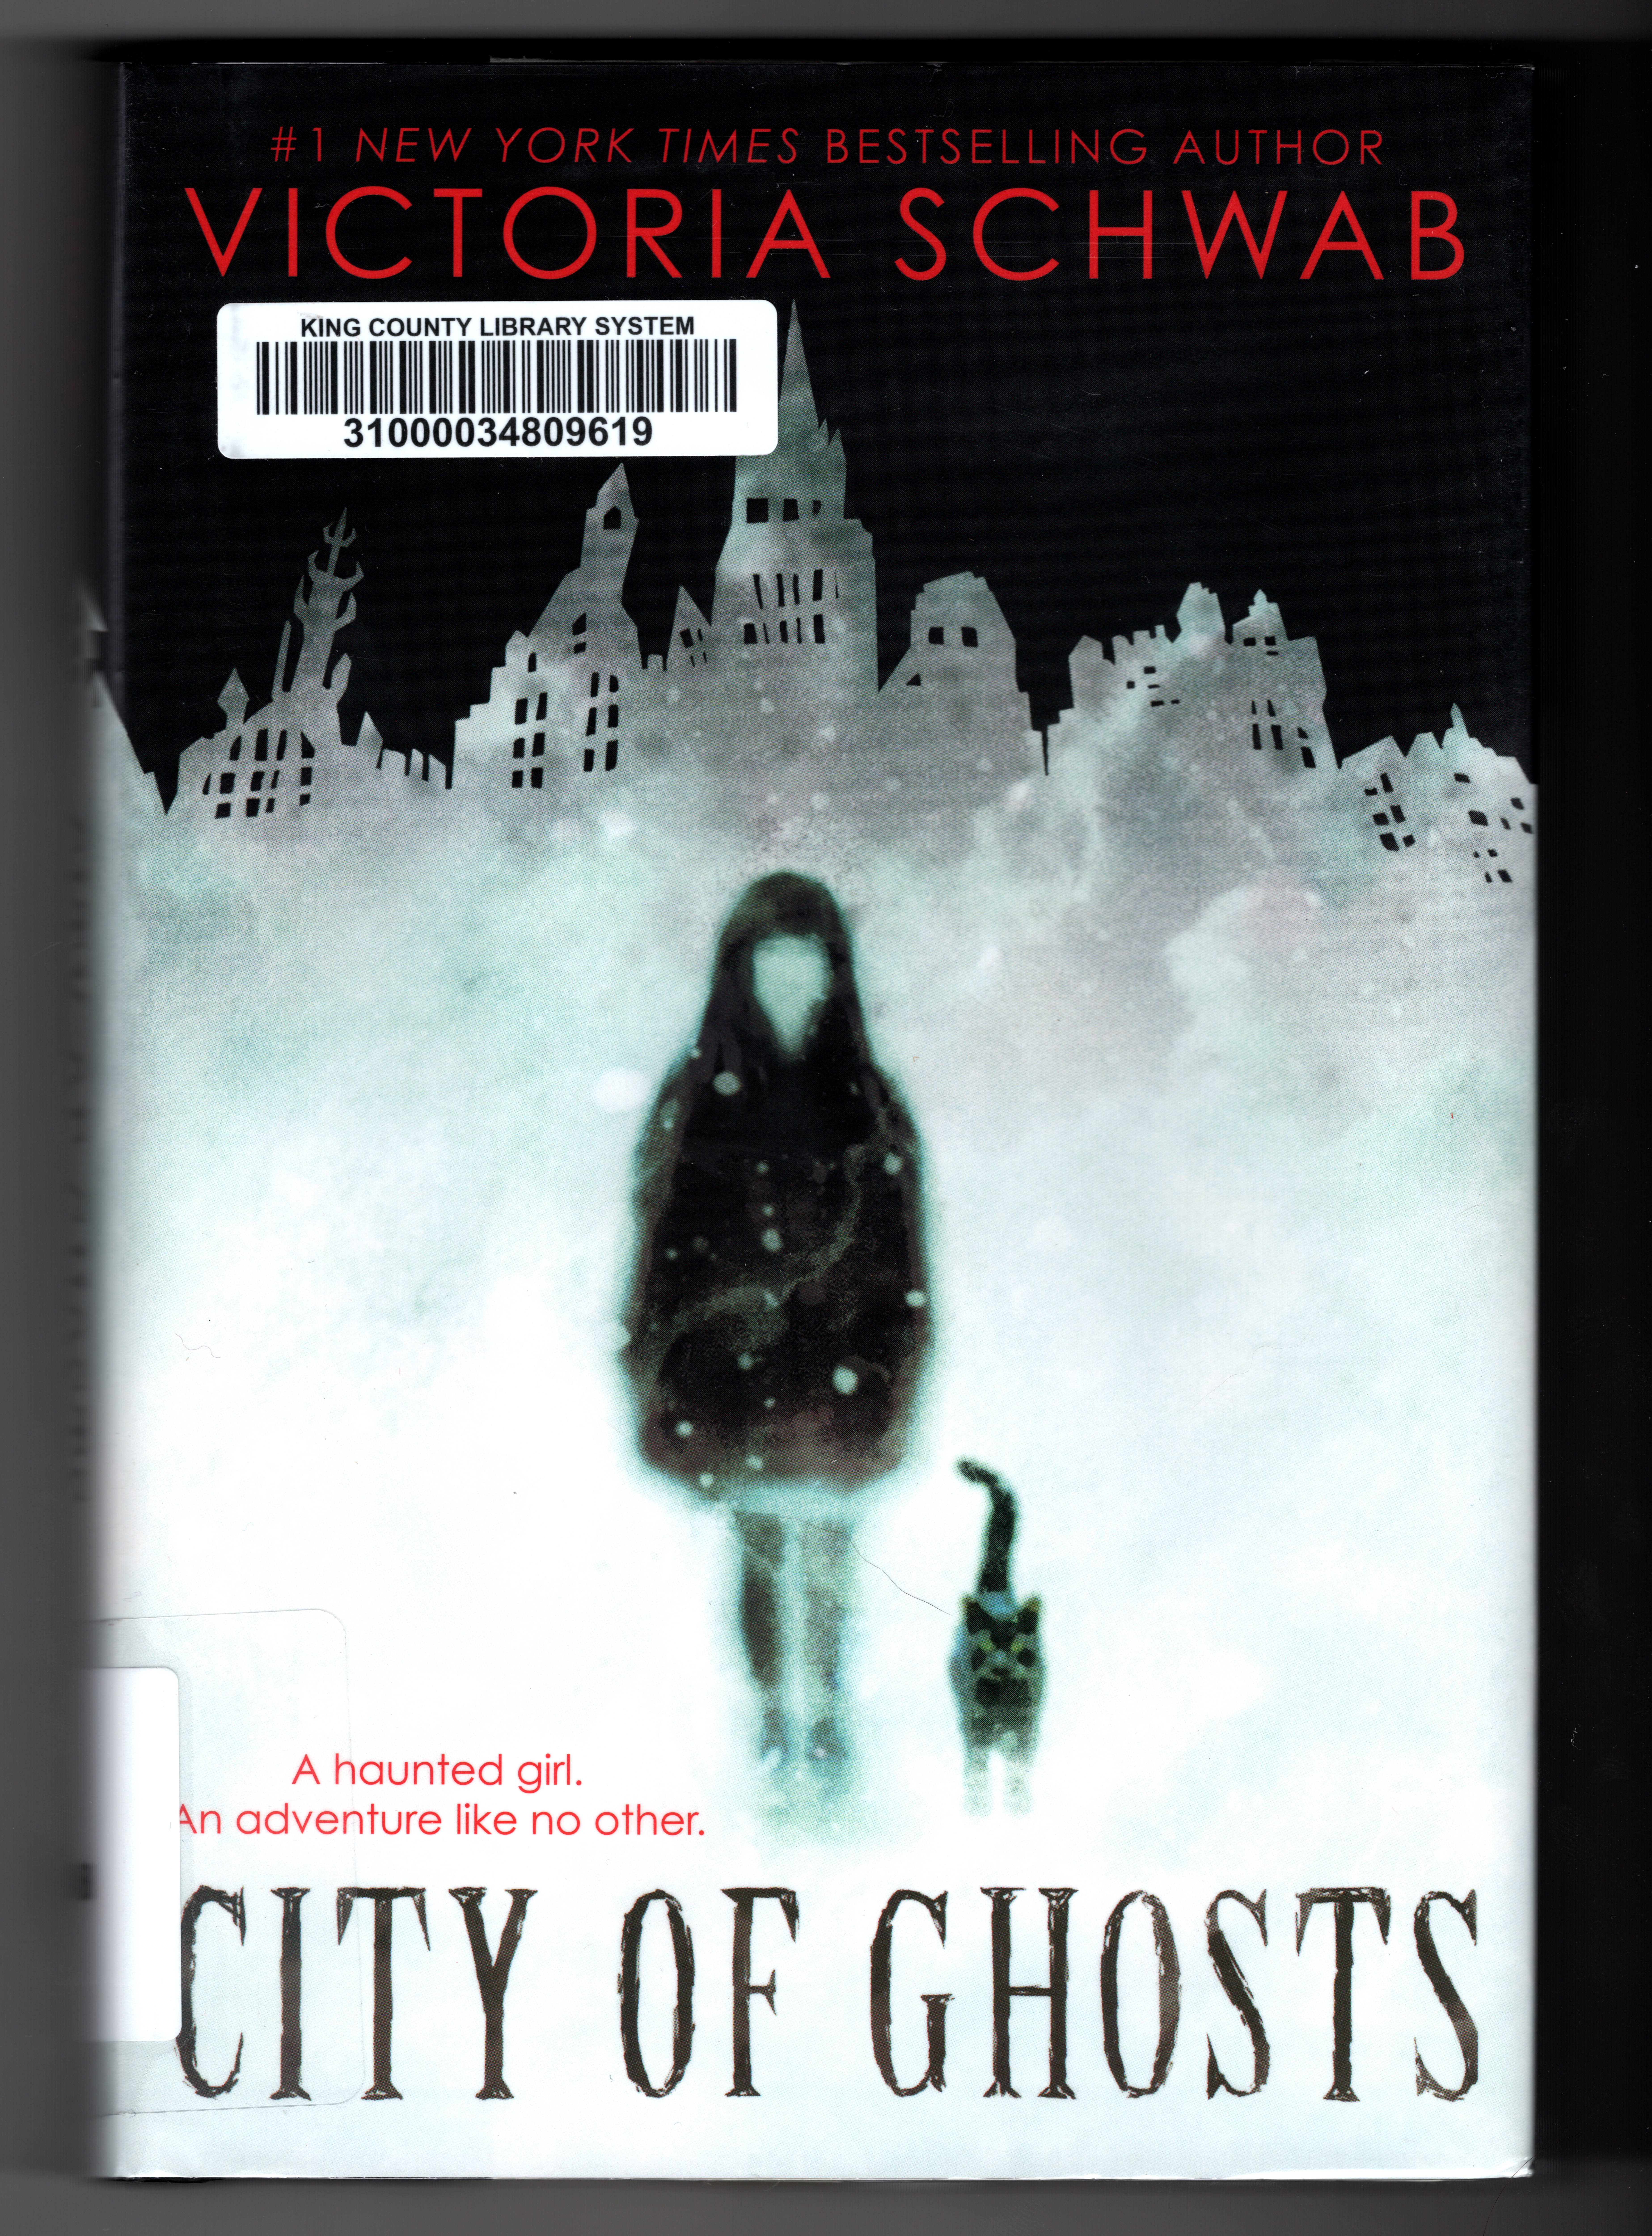 book cover - schwab, victoria - city of ghosts